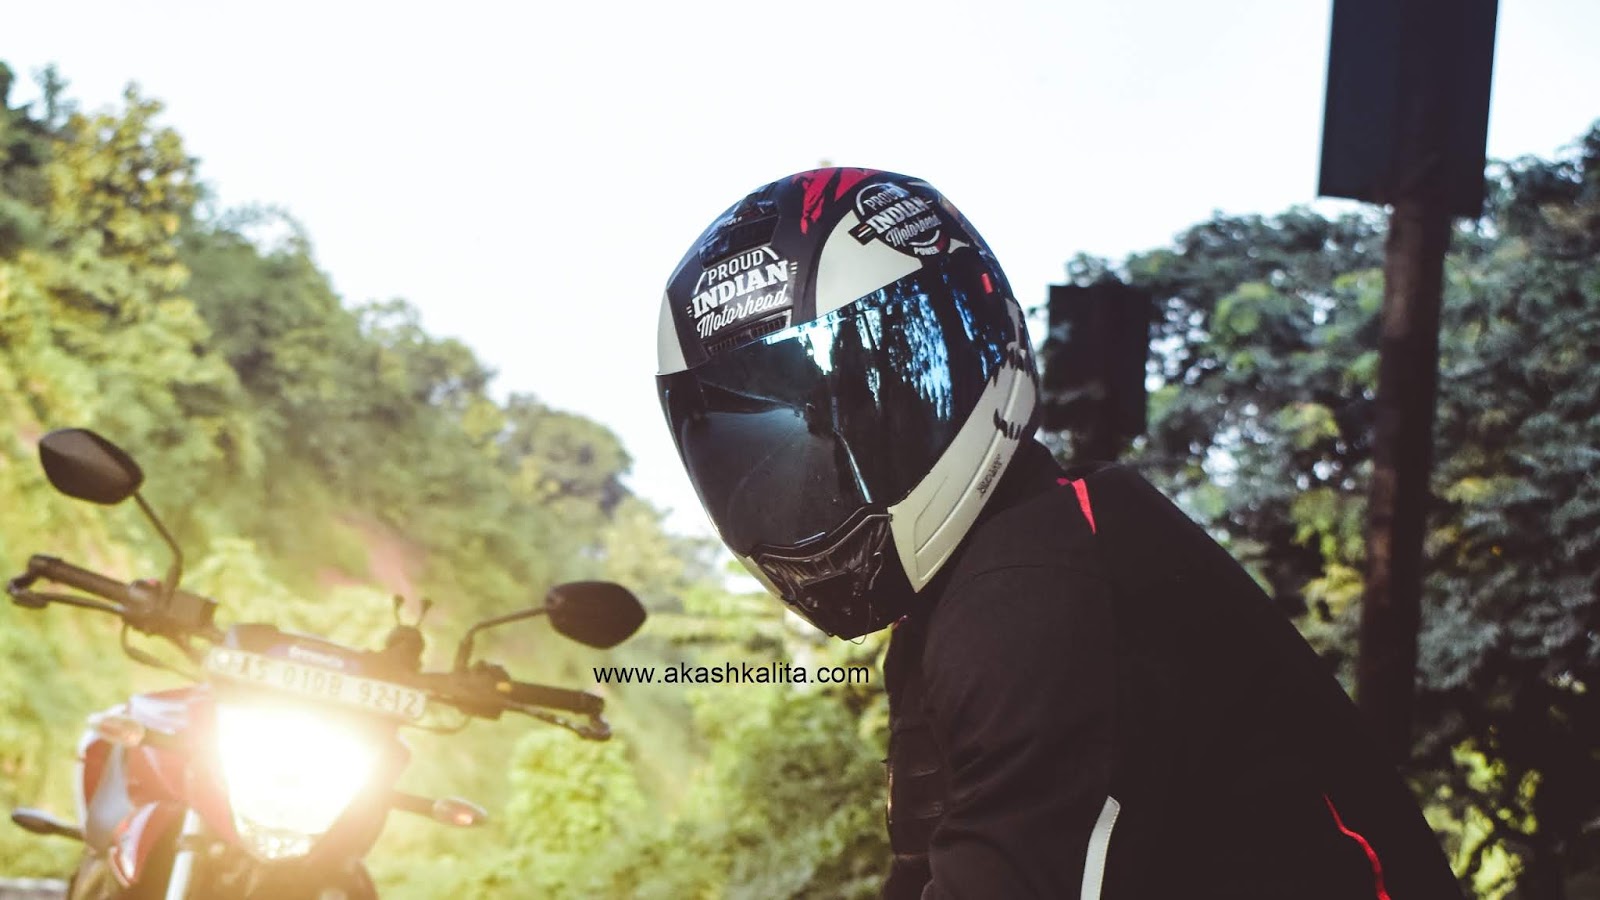 Clear Visor Vs Mirrored, How To Mirror Tint A Motorcycle Helmet Visor